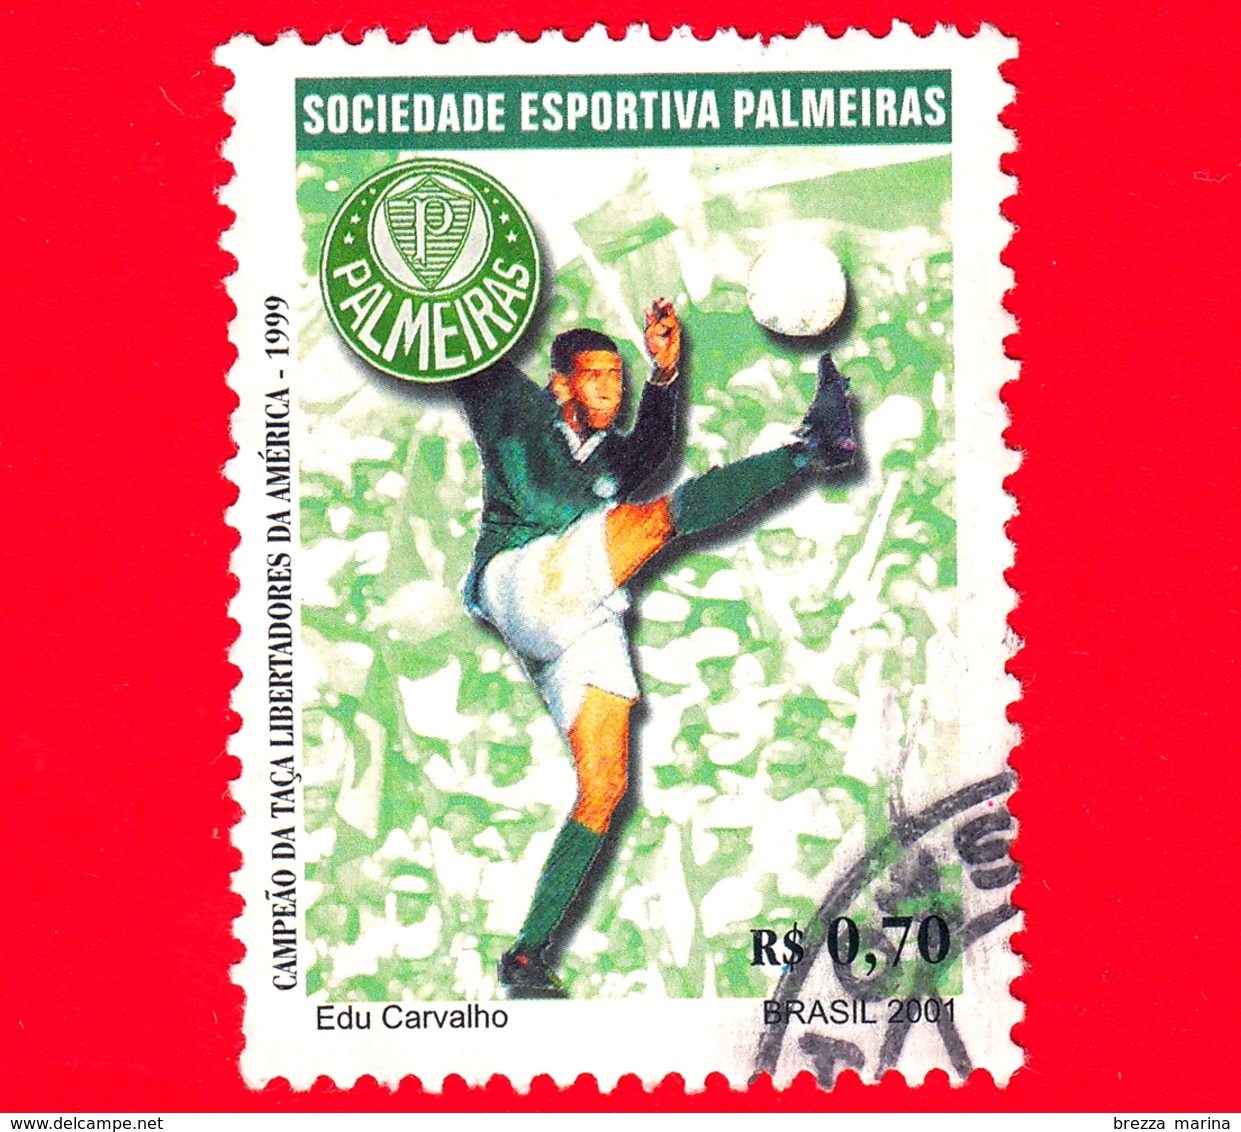 BRASILE - Usato - 2001 - Vincitori Di Coppa Libertadores - Sociedade Esportiva Palmeiras - 0.70 - Used Stamps